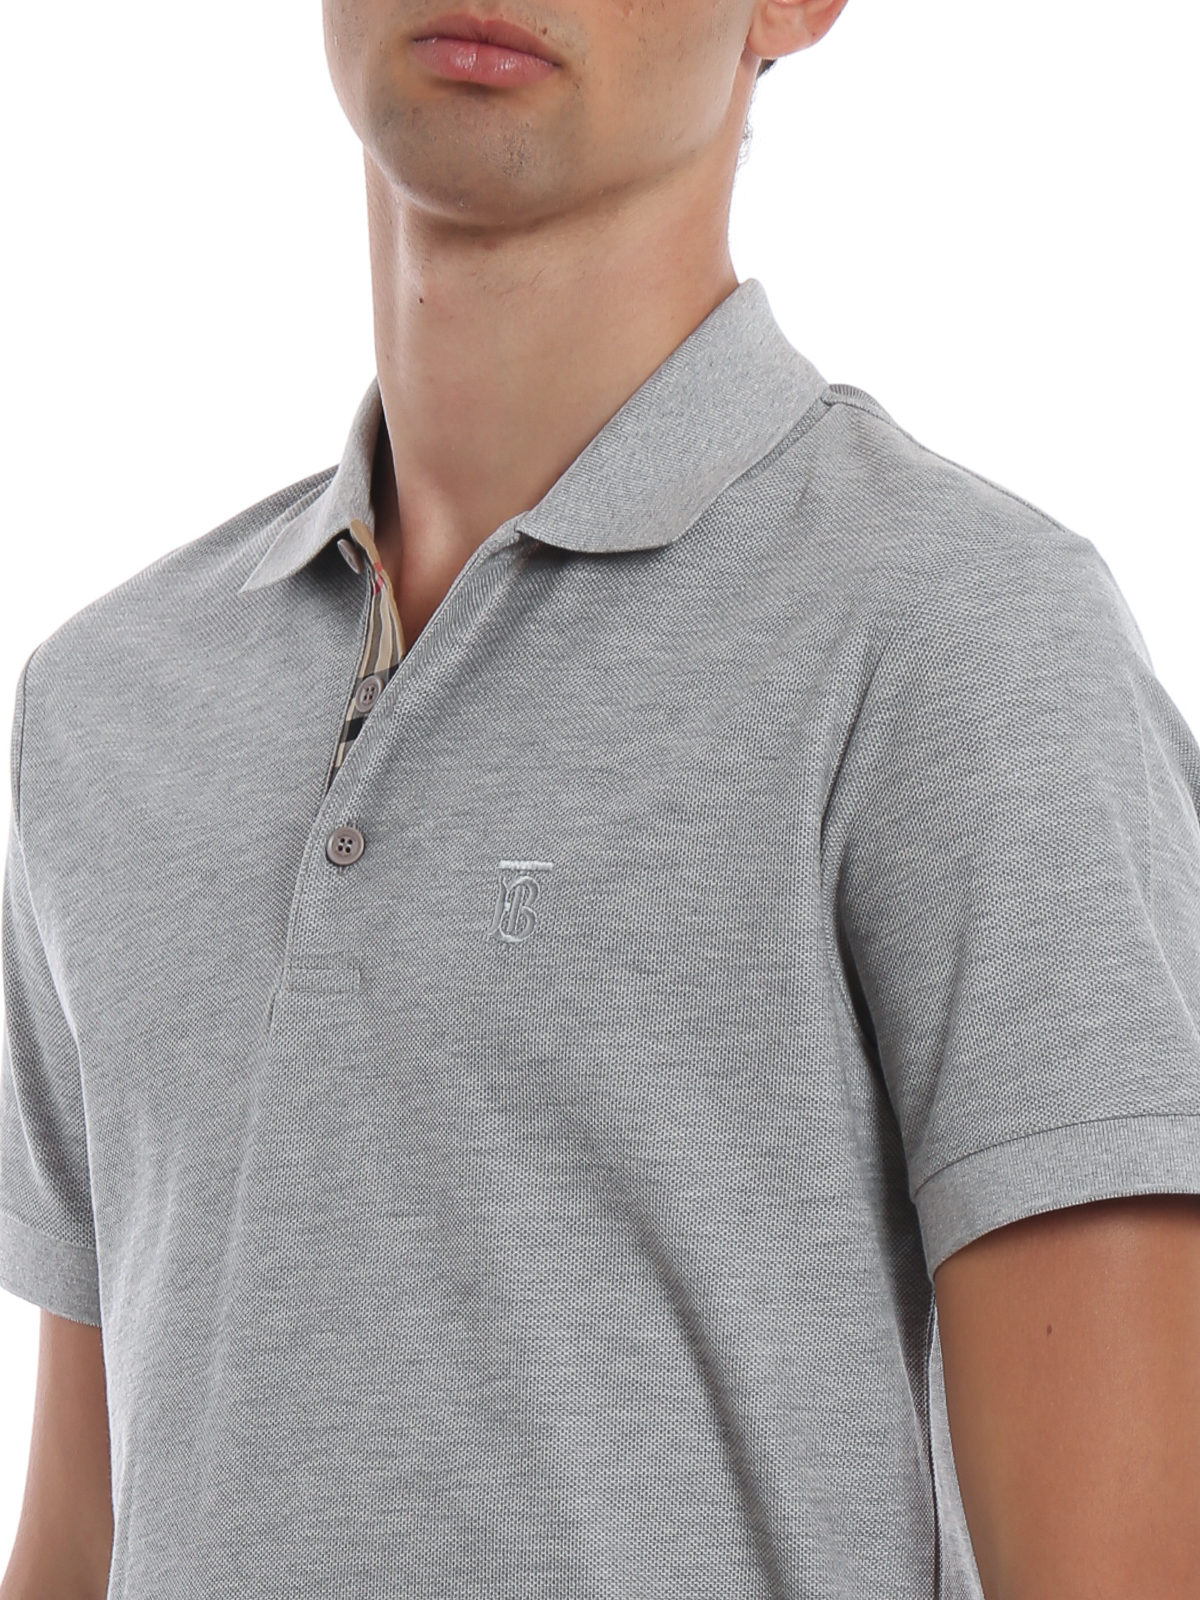 Burberry Grey Polo Shirt Flash Sales, SAVE 55% 